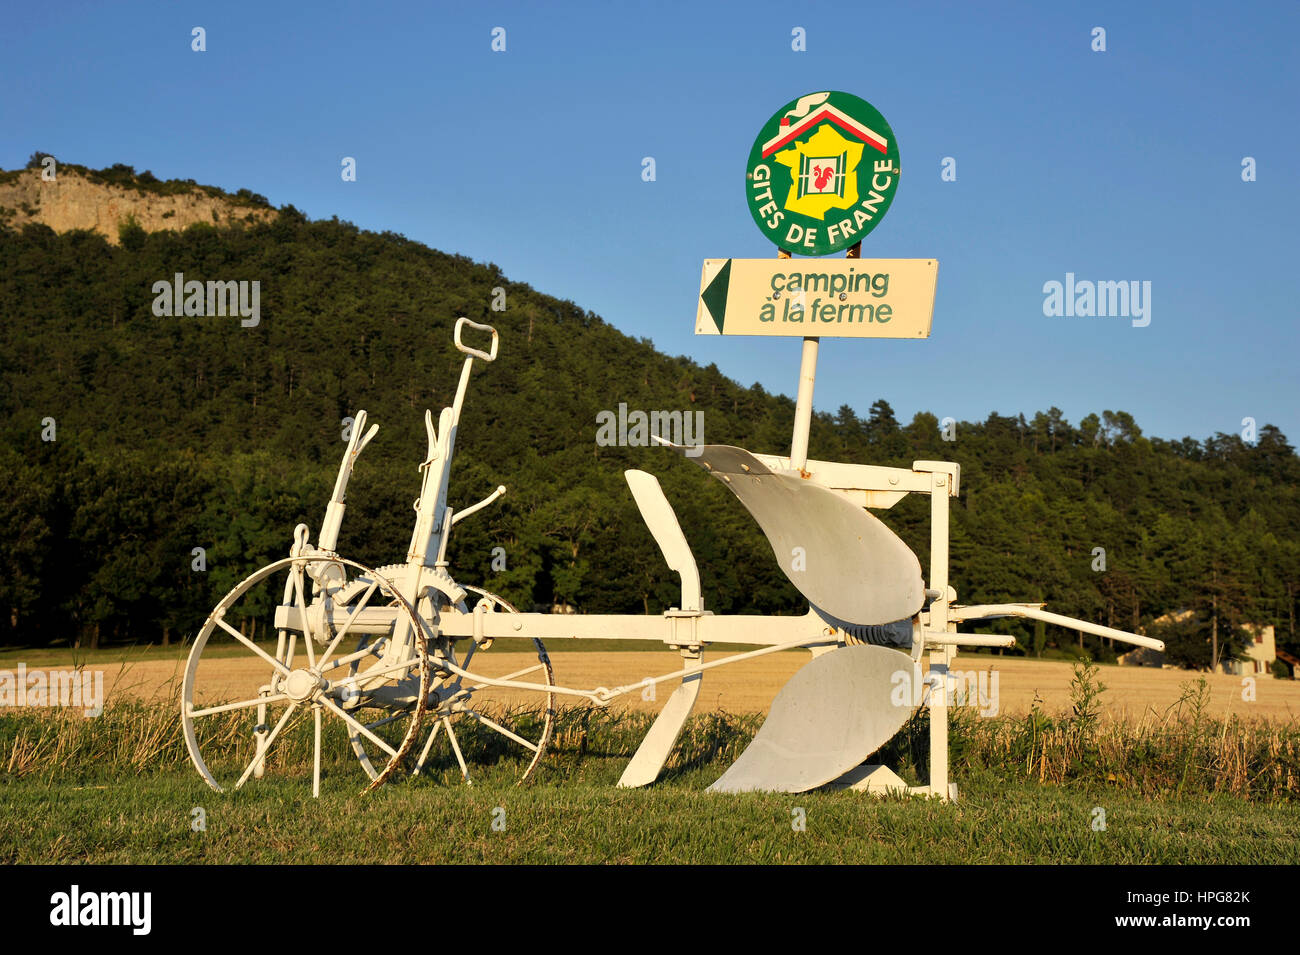 Francia, Ródano-Alpes, Drôme provenzal, signo que indica una granja camping etiquetados Gîtes de France. Foto de stock